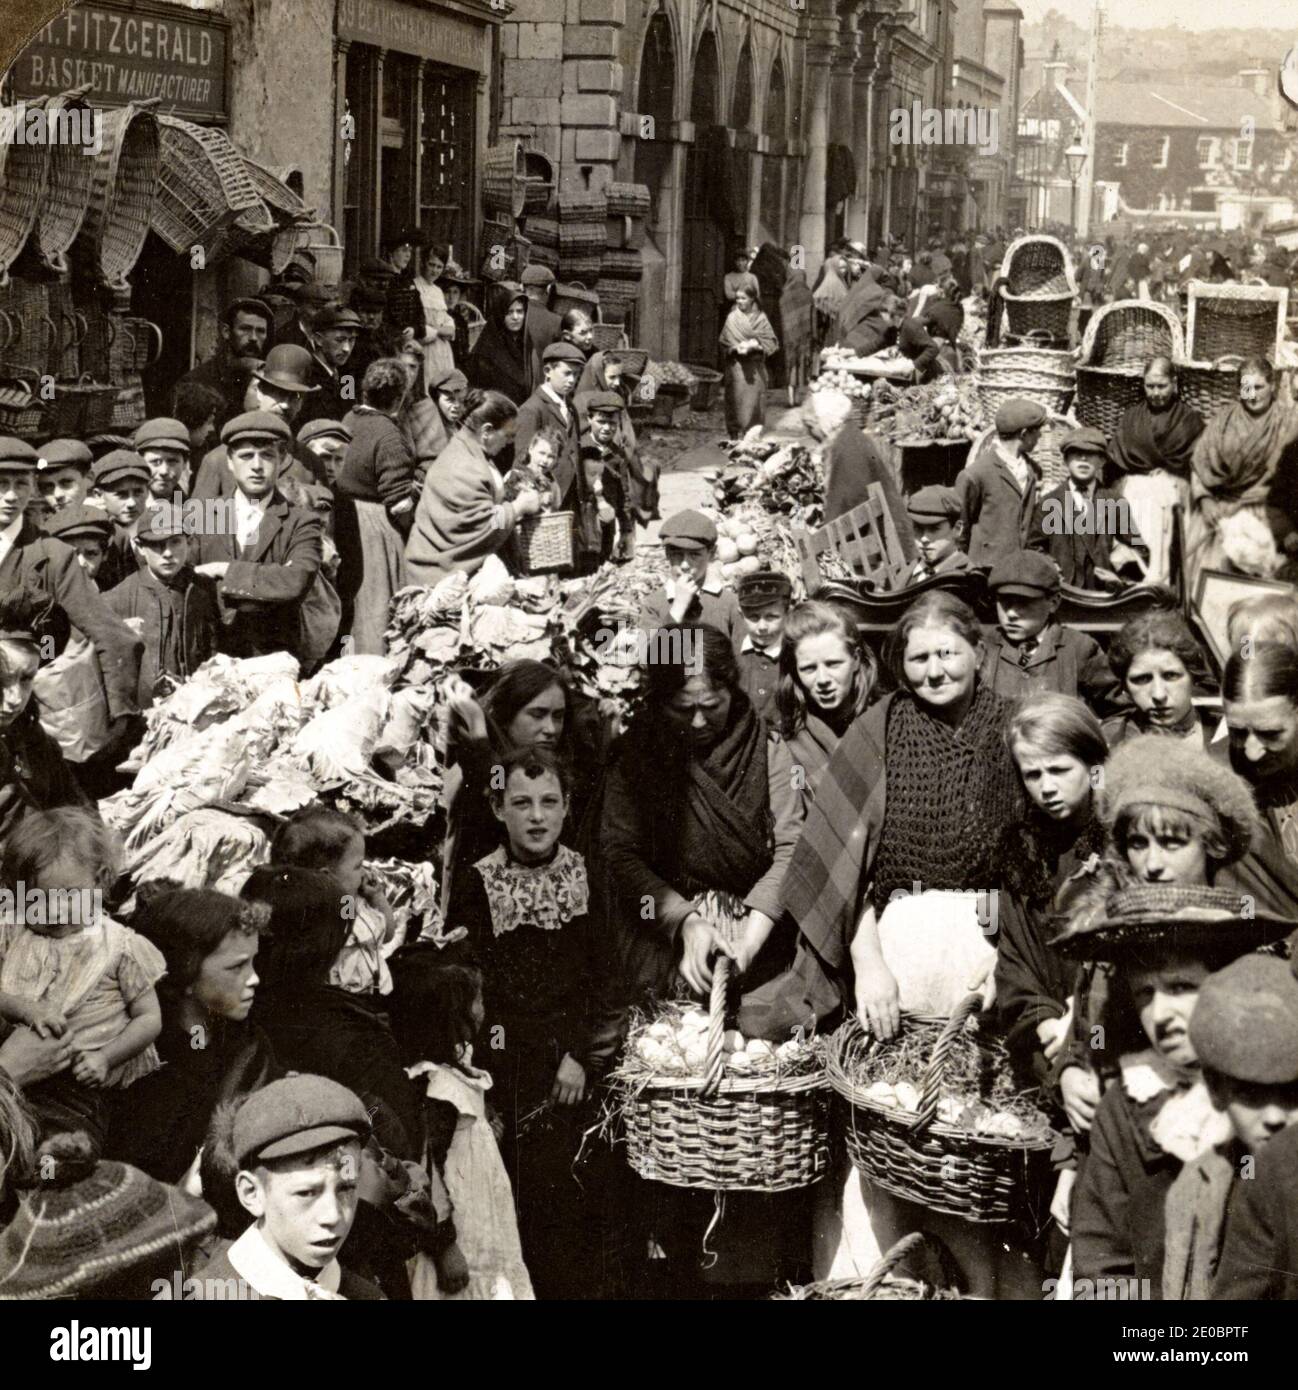 The venders' harvest day - characteristic Irish market, Cork, Ireland, 1905 Stock Photo